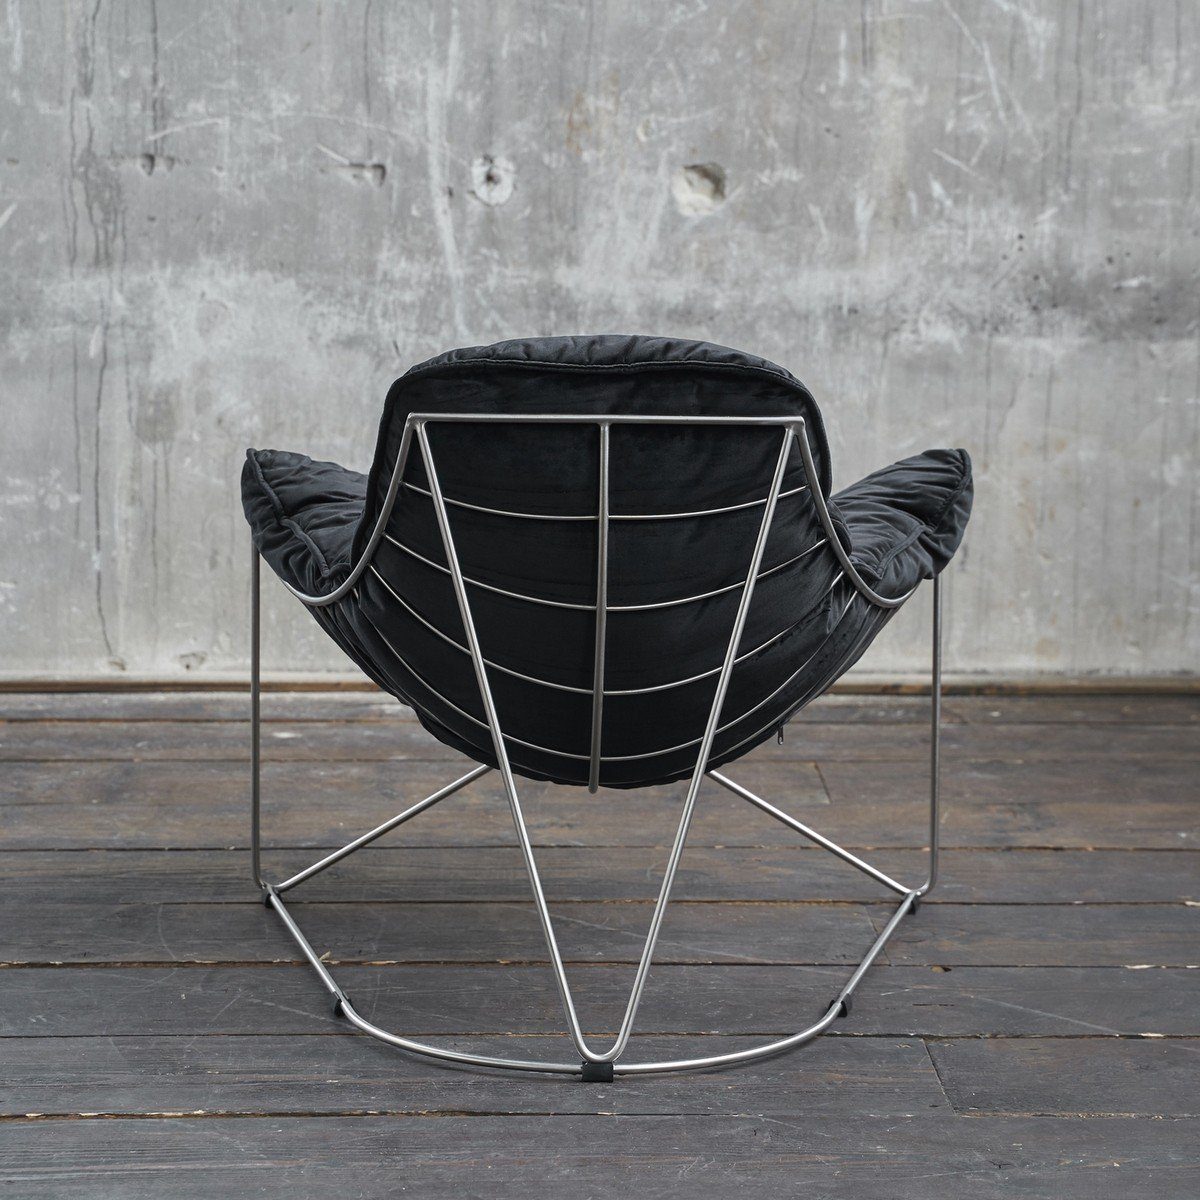 schwarz Sessel KAWOLA Farben Stoff OSCA, verschiedene Relaxsessel